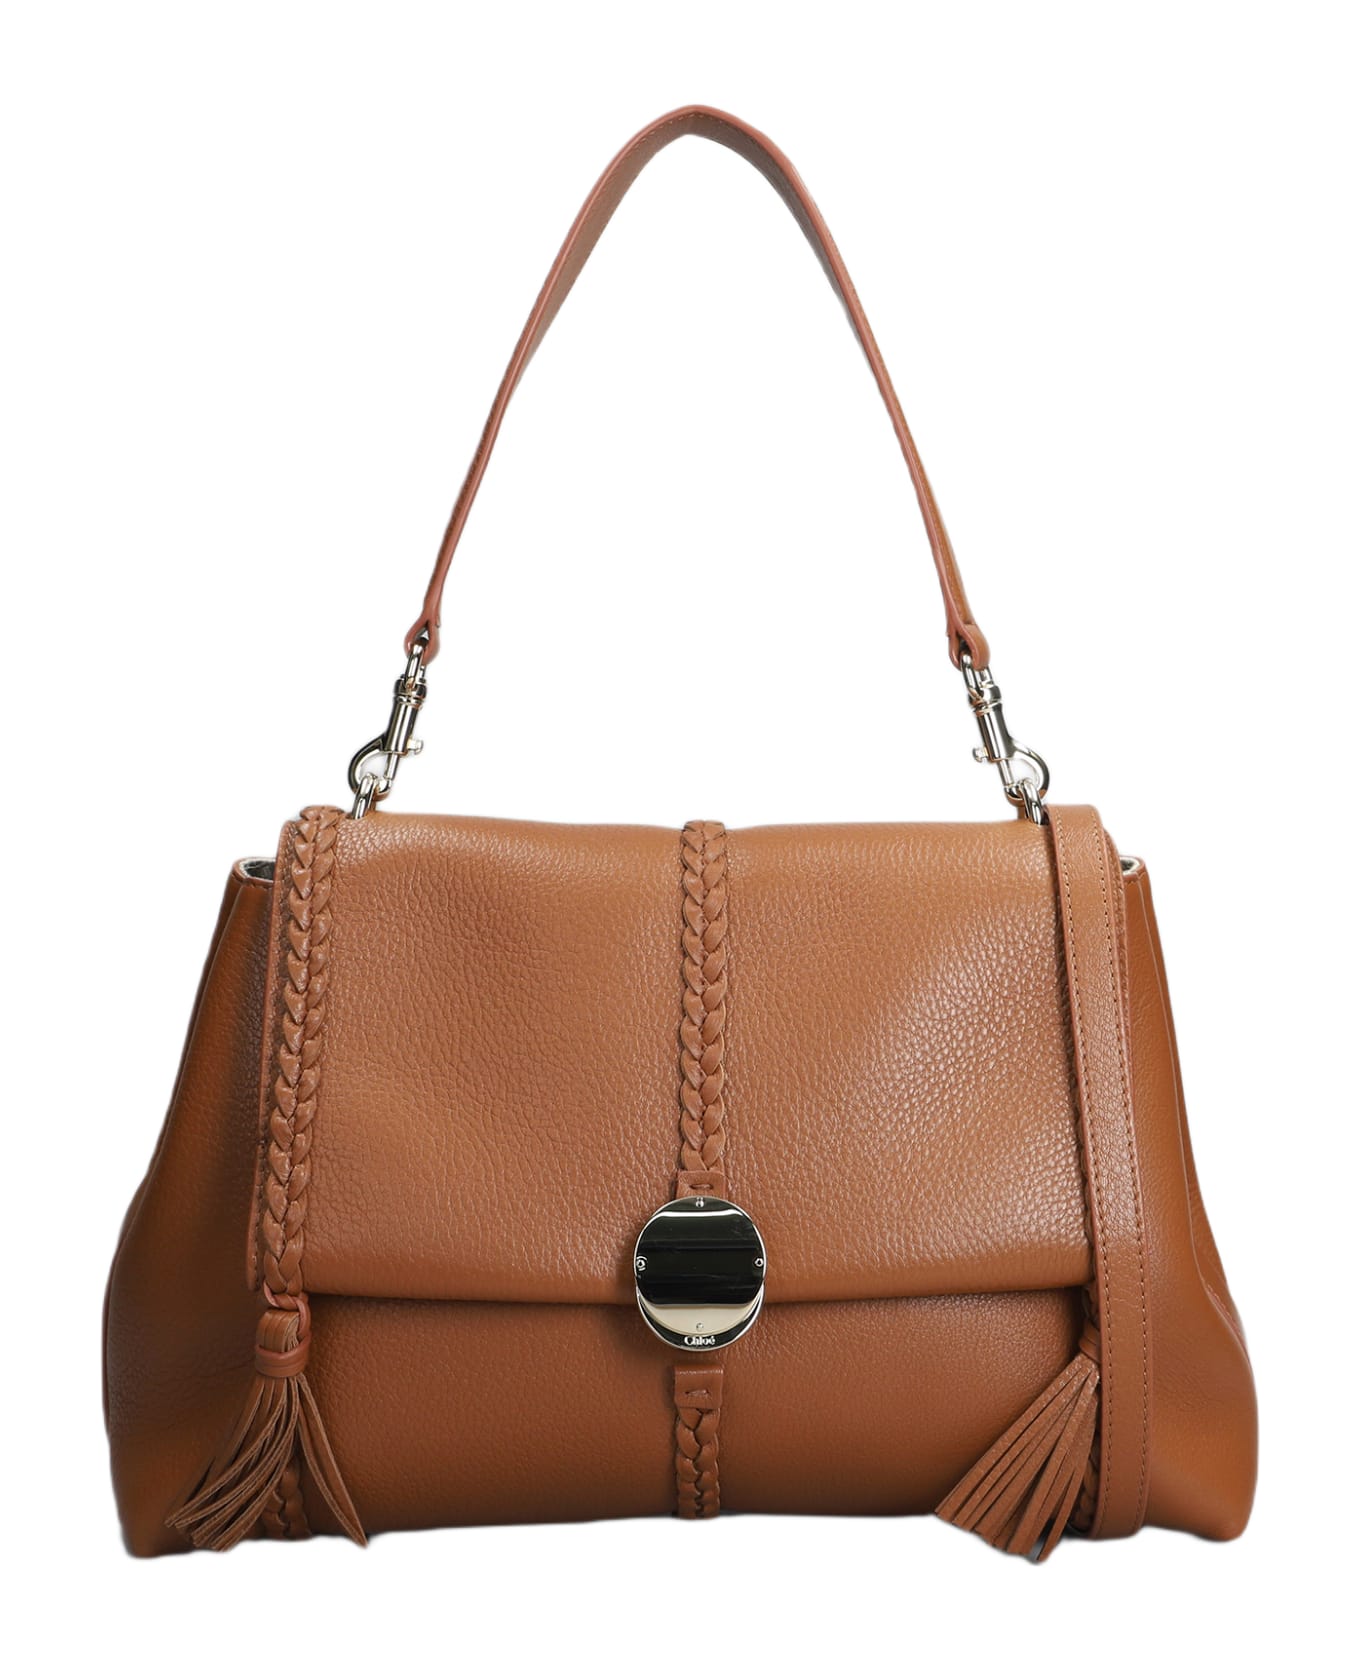 Chloé Penelope Shoulder Bag In Leather Color Leather - leather color